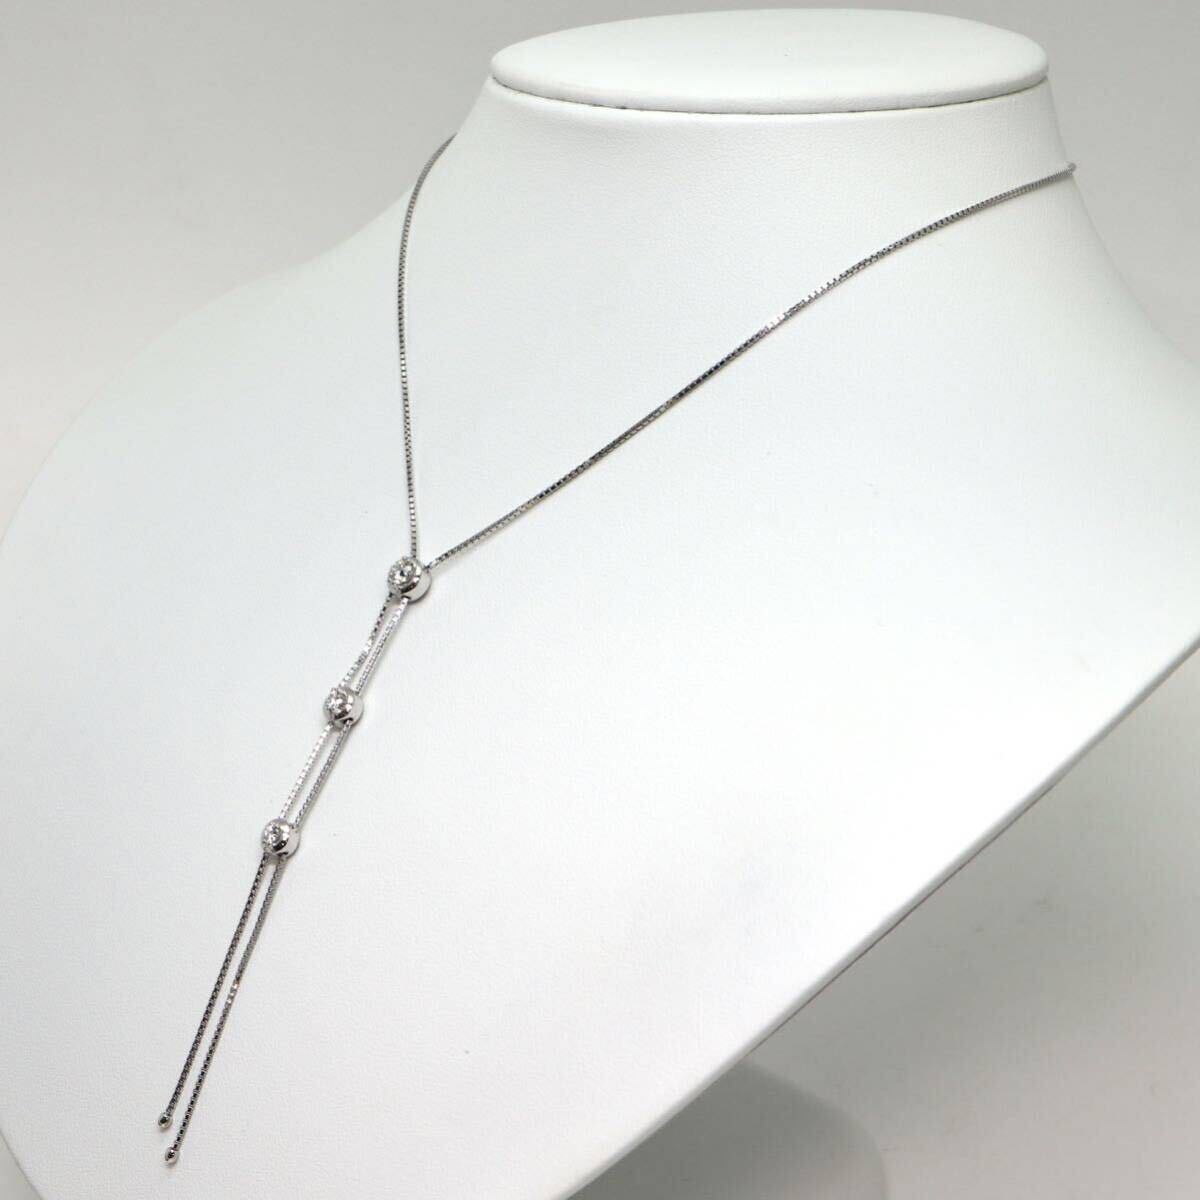 TASAKI(田崎真珠)豪華!!可動式!!《K18WG 天然ダイヤモンドネックレス》A 約5.9g 0.37ct diamond jewelry necklace EF9/EH0の画像2